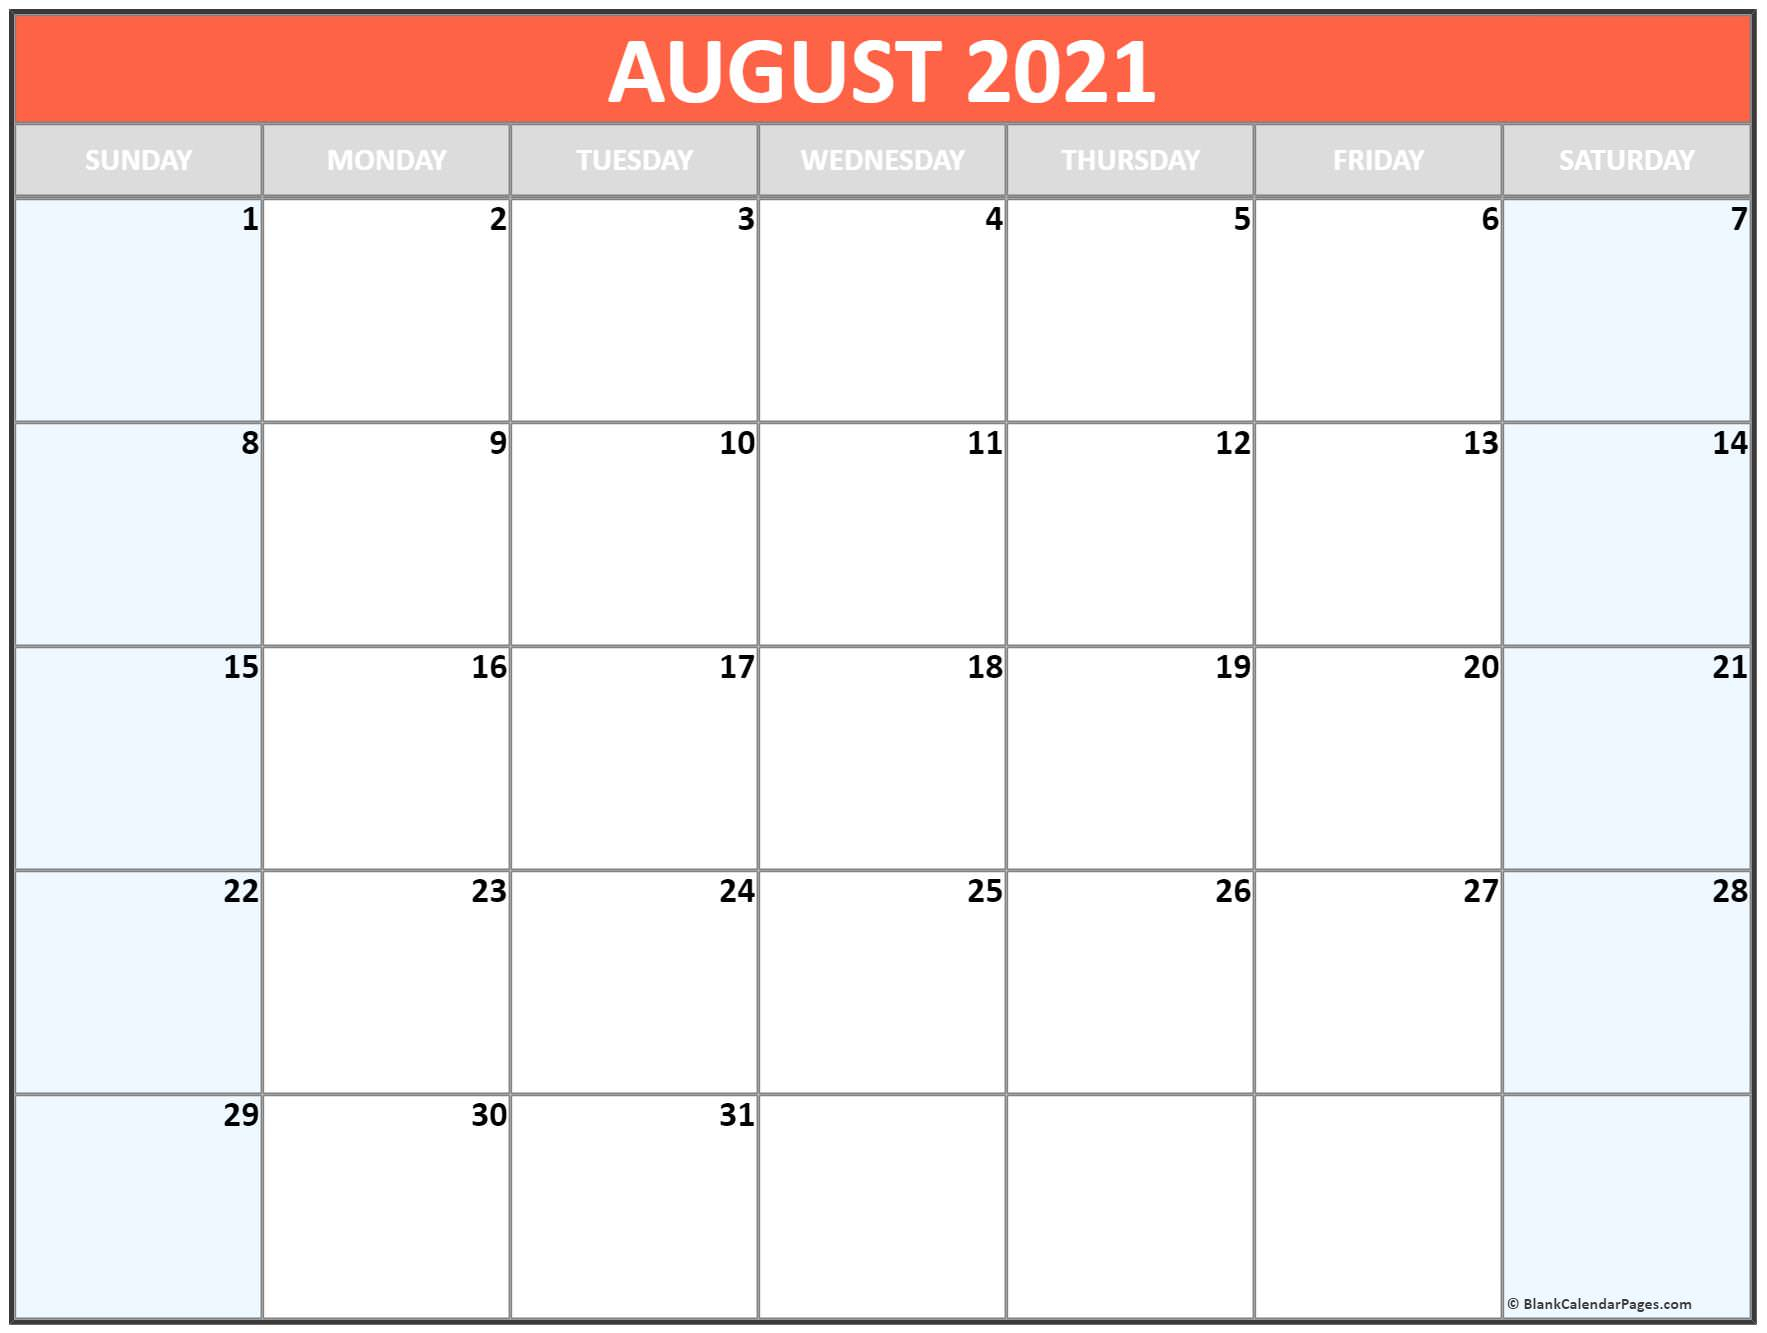 August 2021 Blank Calendar Templates  Calendar Template 2021 with regard to Large Square Blank Calendar